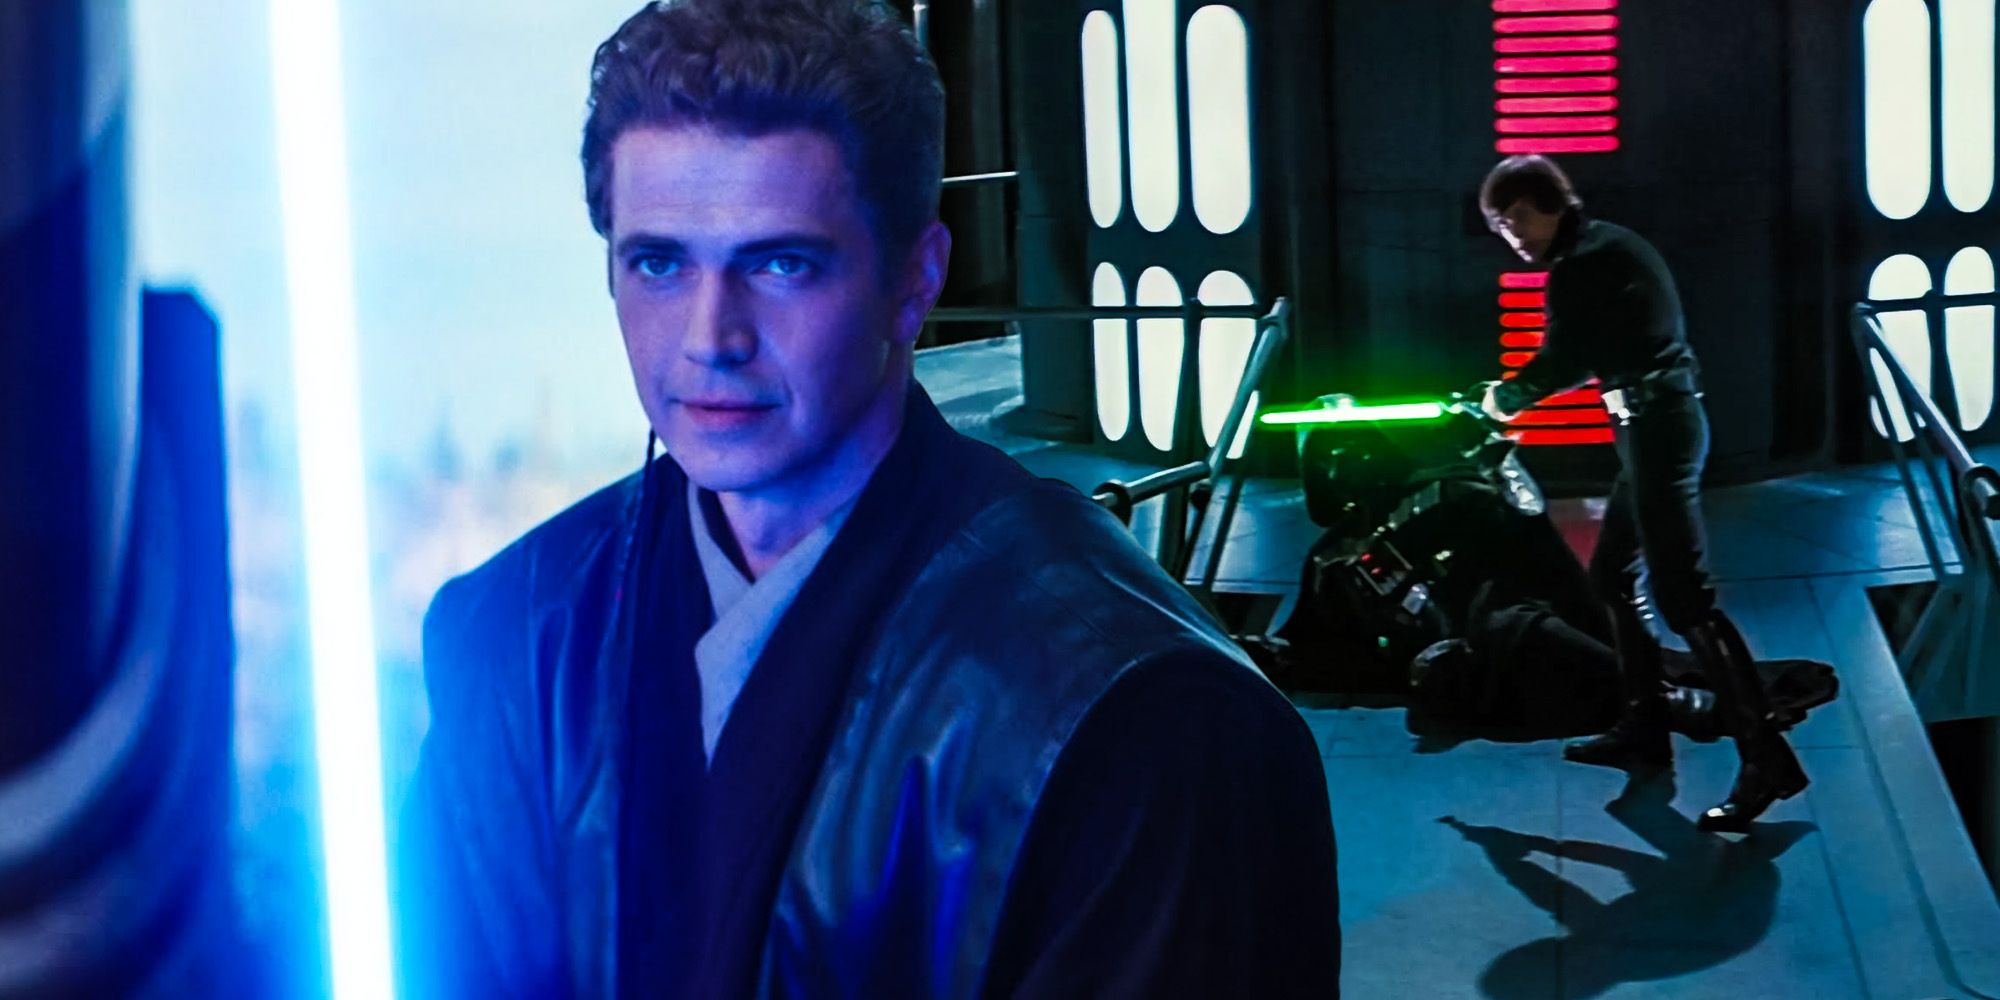 Star wars Luke return of the jedi anakin mercy line obi wan kenobi